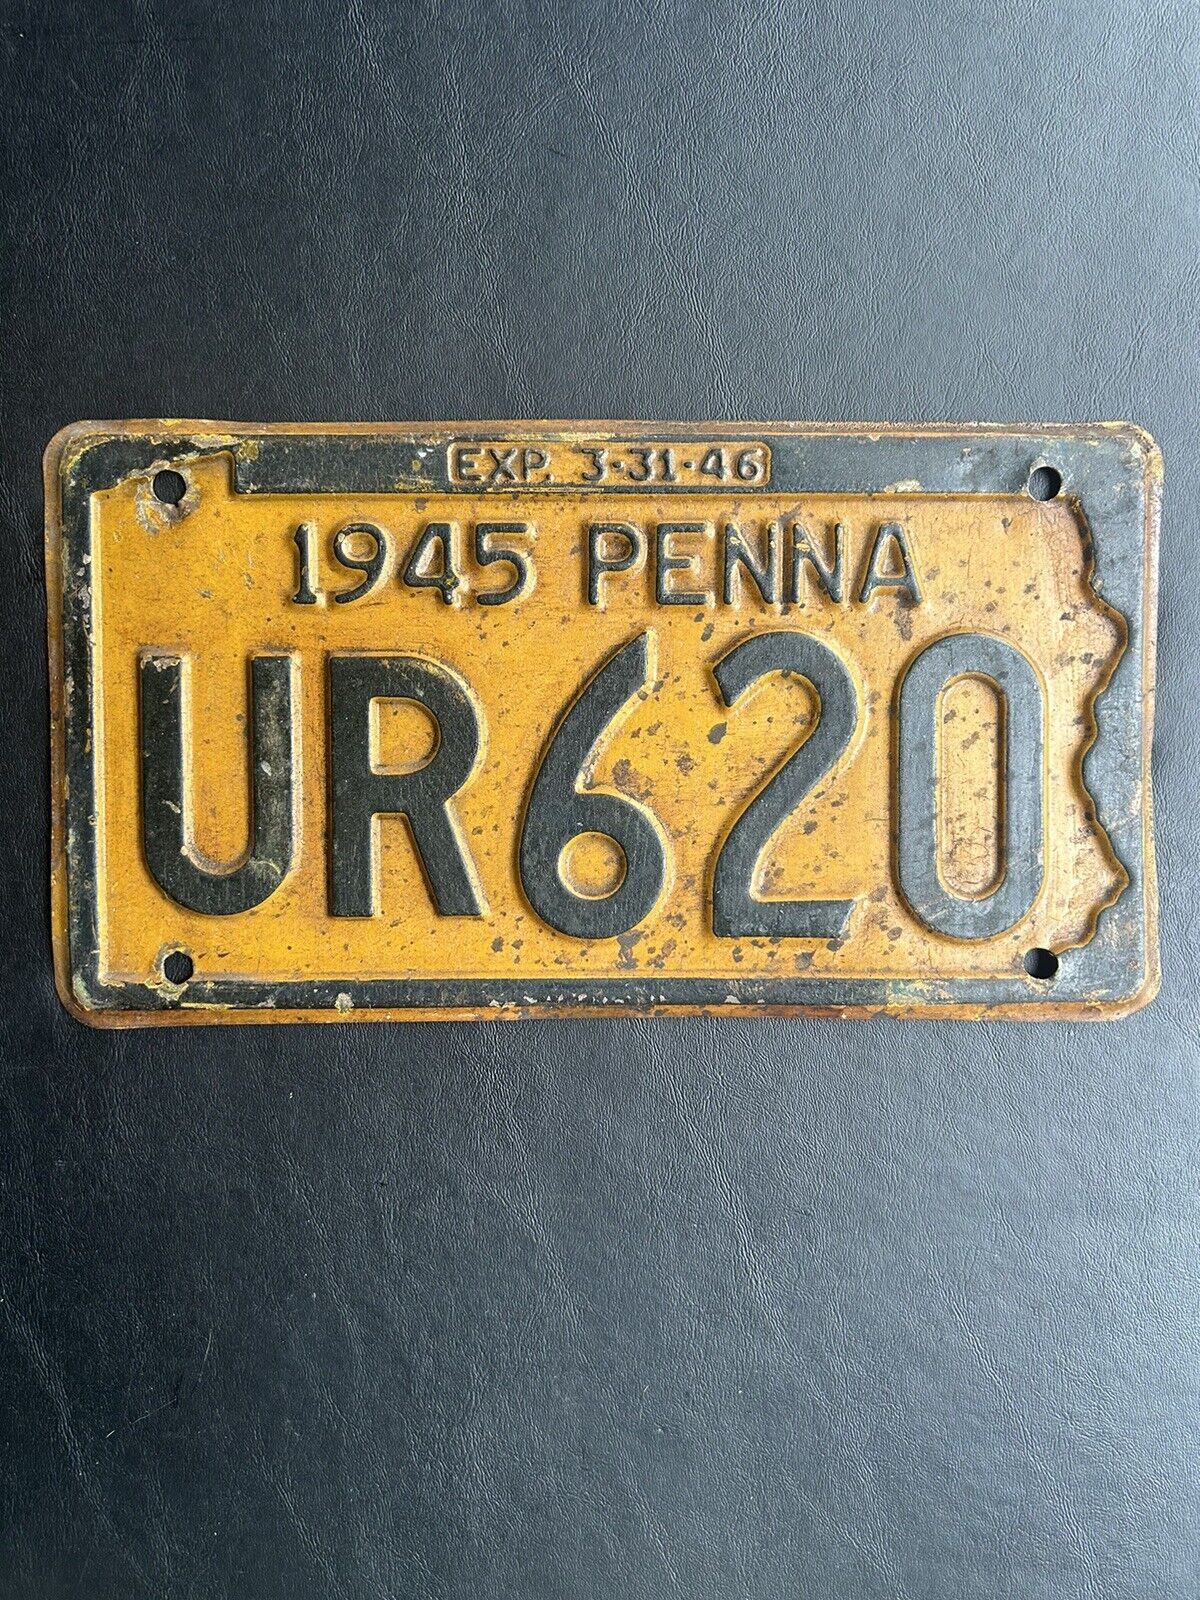 1945 Pennsylvania License Plate UR620